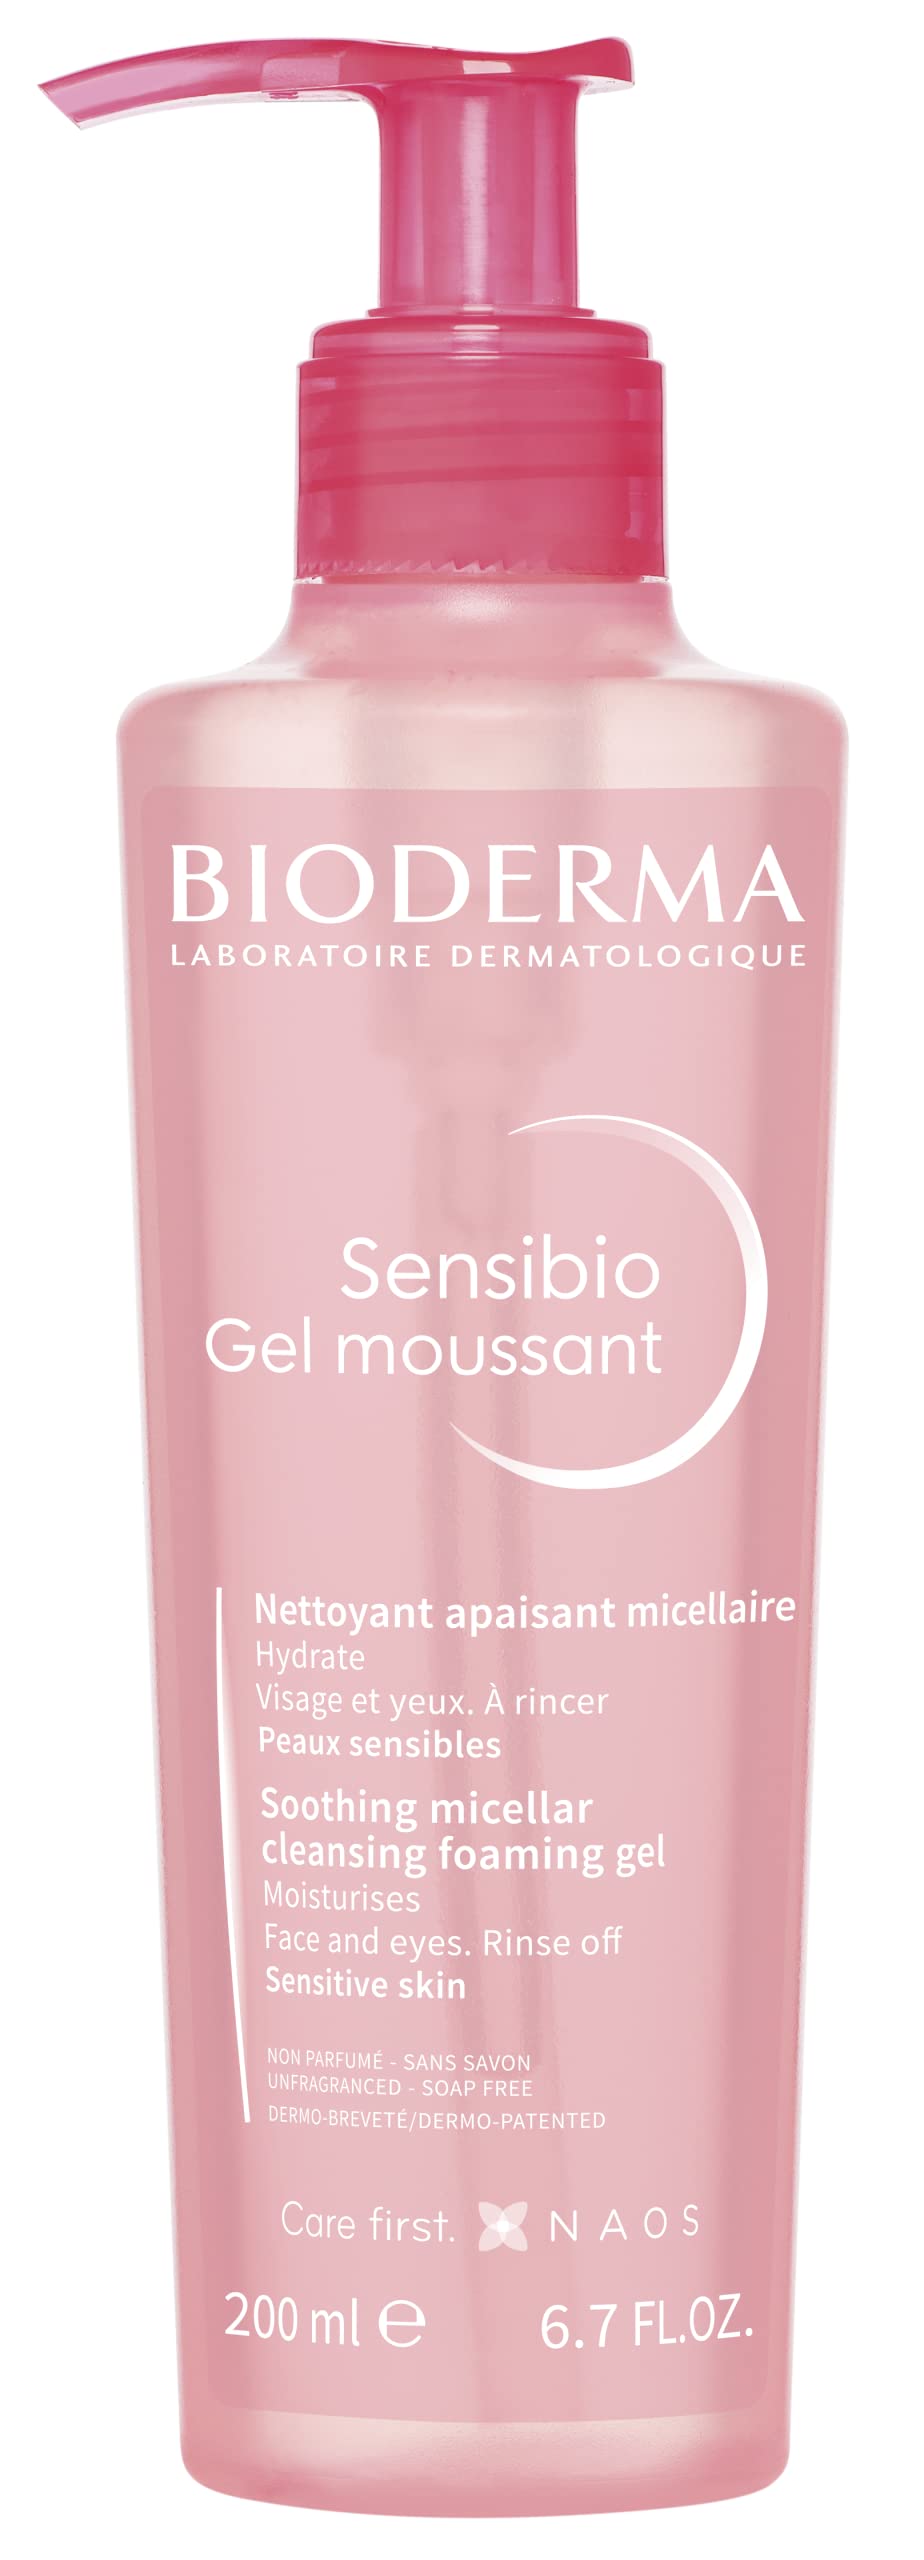 Book Cover Bioderma - Sensibio Foaming Gel - Foaming Cleanser - Cleanser and Makeup Remover - Facial Foaming Cleanser for Sensitive Skin 6.76 Fl Oz (Pack of 1)